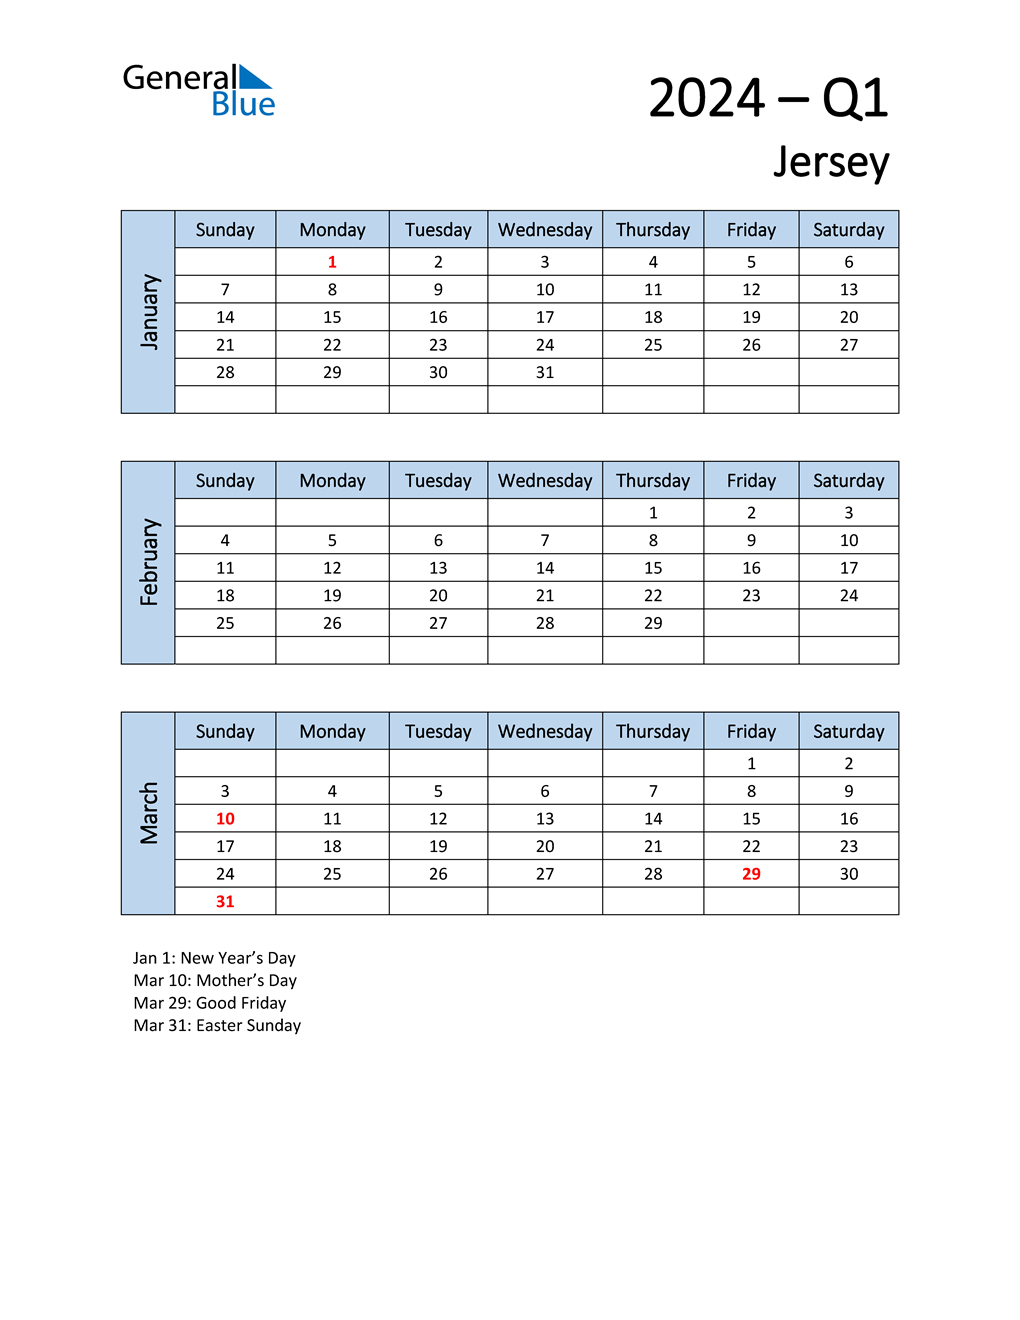 Q1 2024 Quarterly Calendar with Jersey Holidays